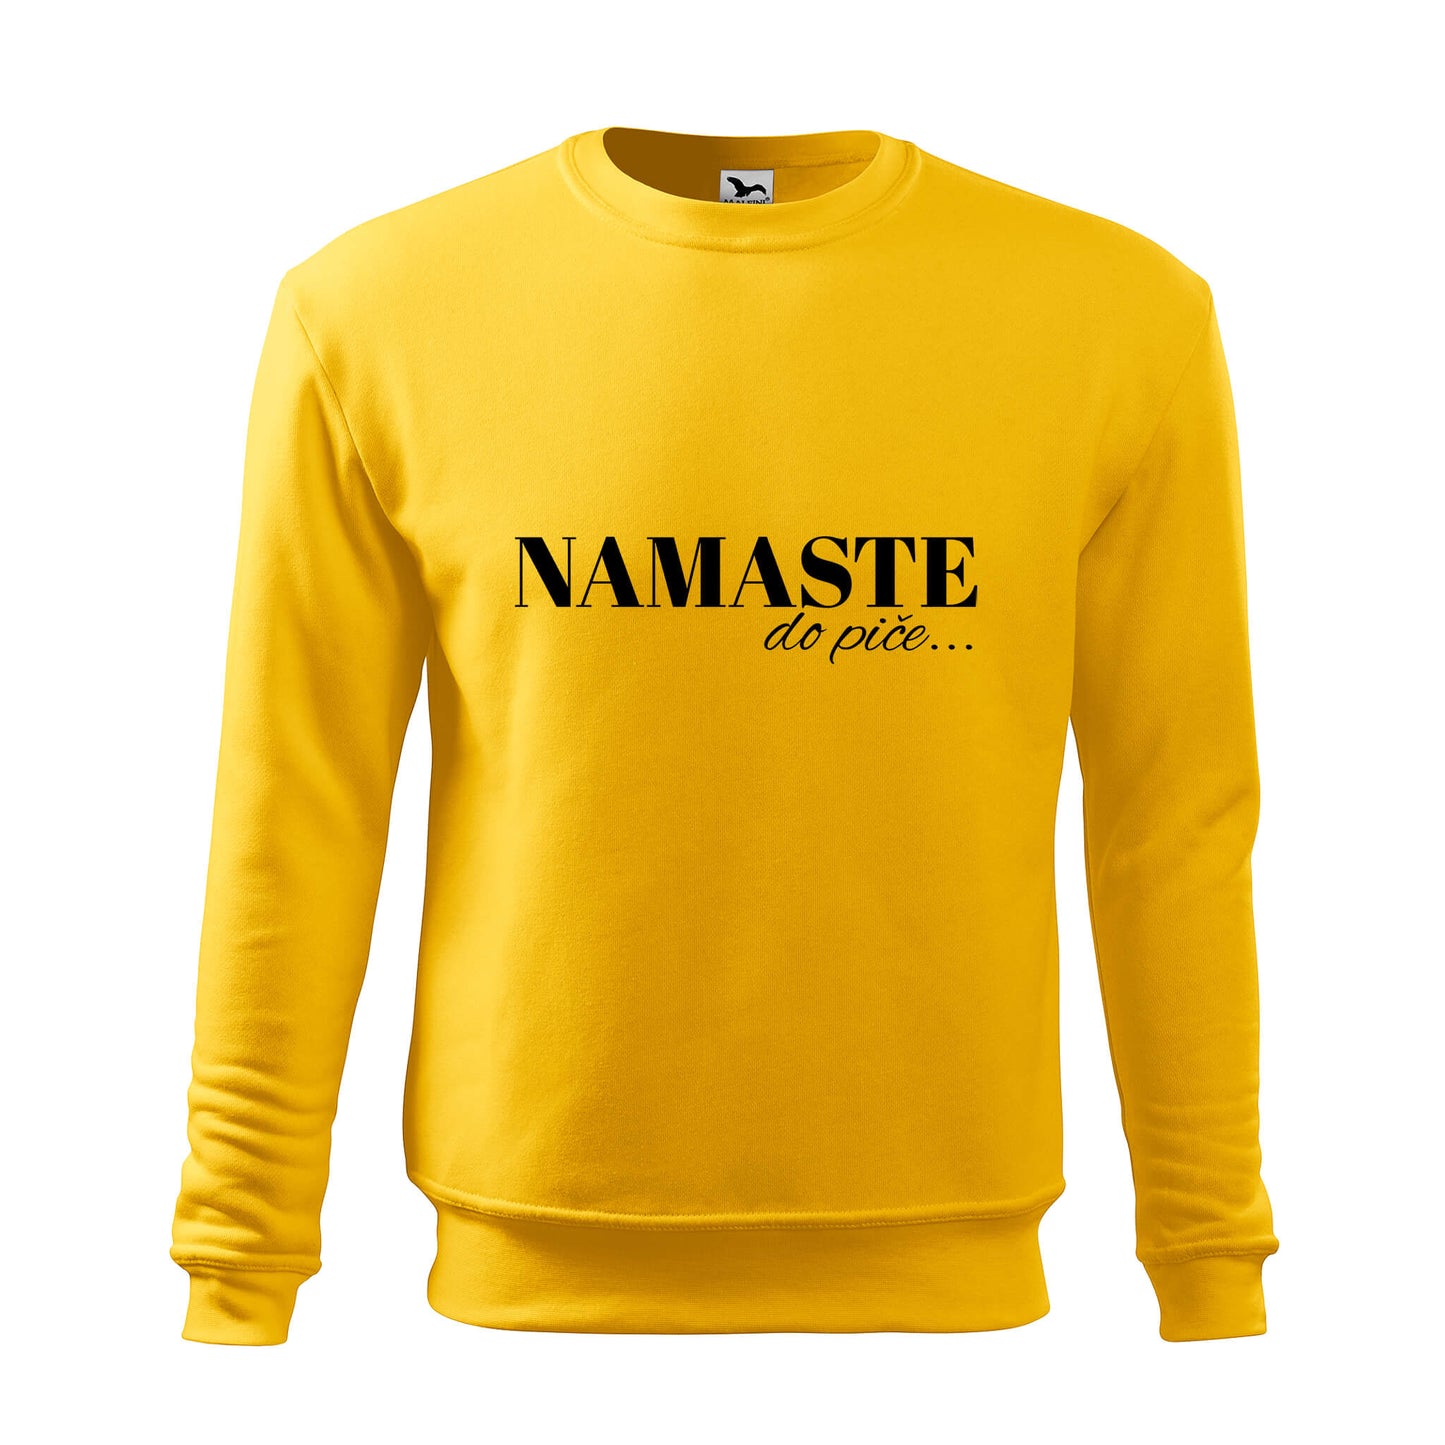 Namaste do pice sweatshirt - rvdesignprint